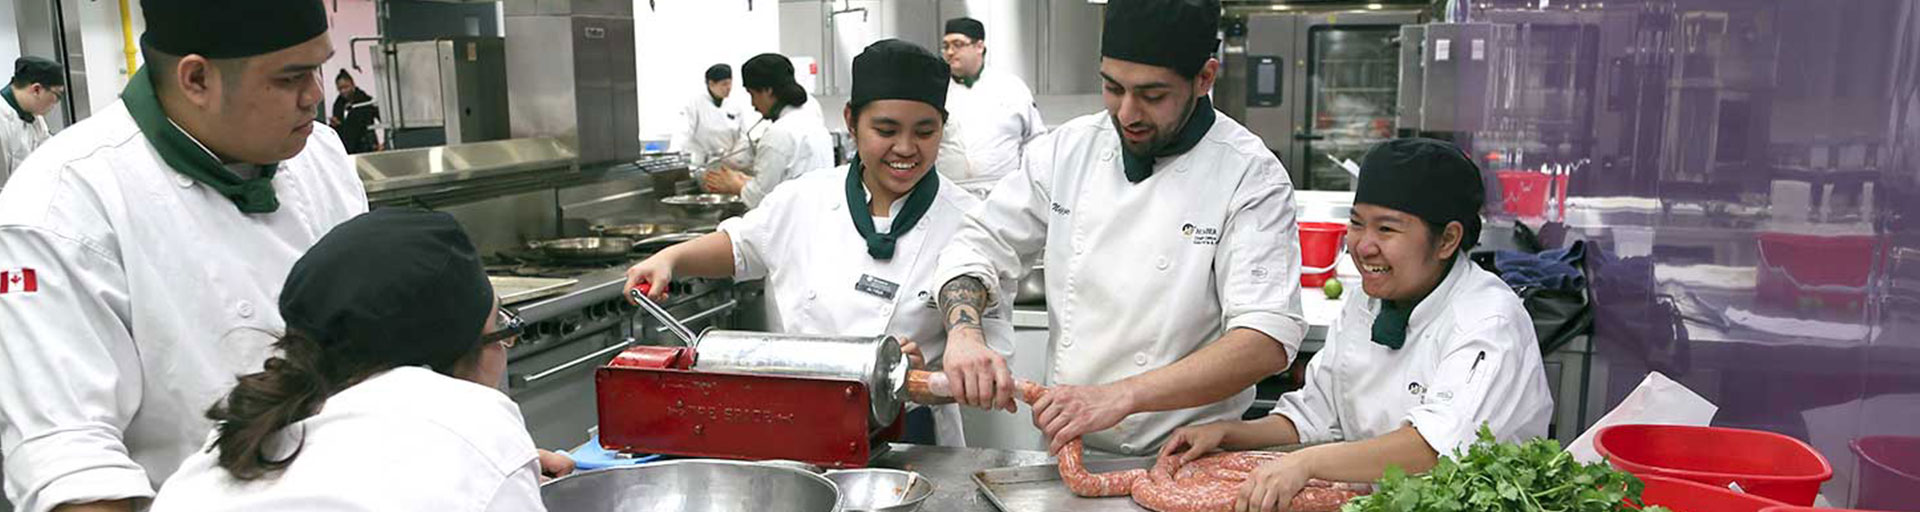 culinary students making sausage